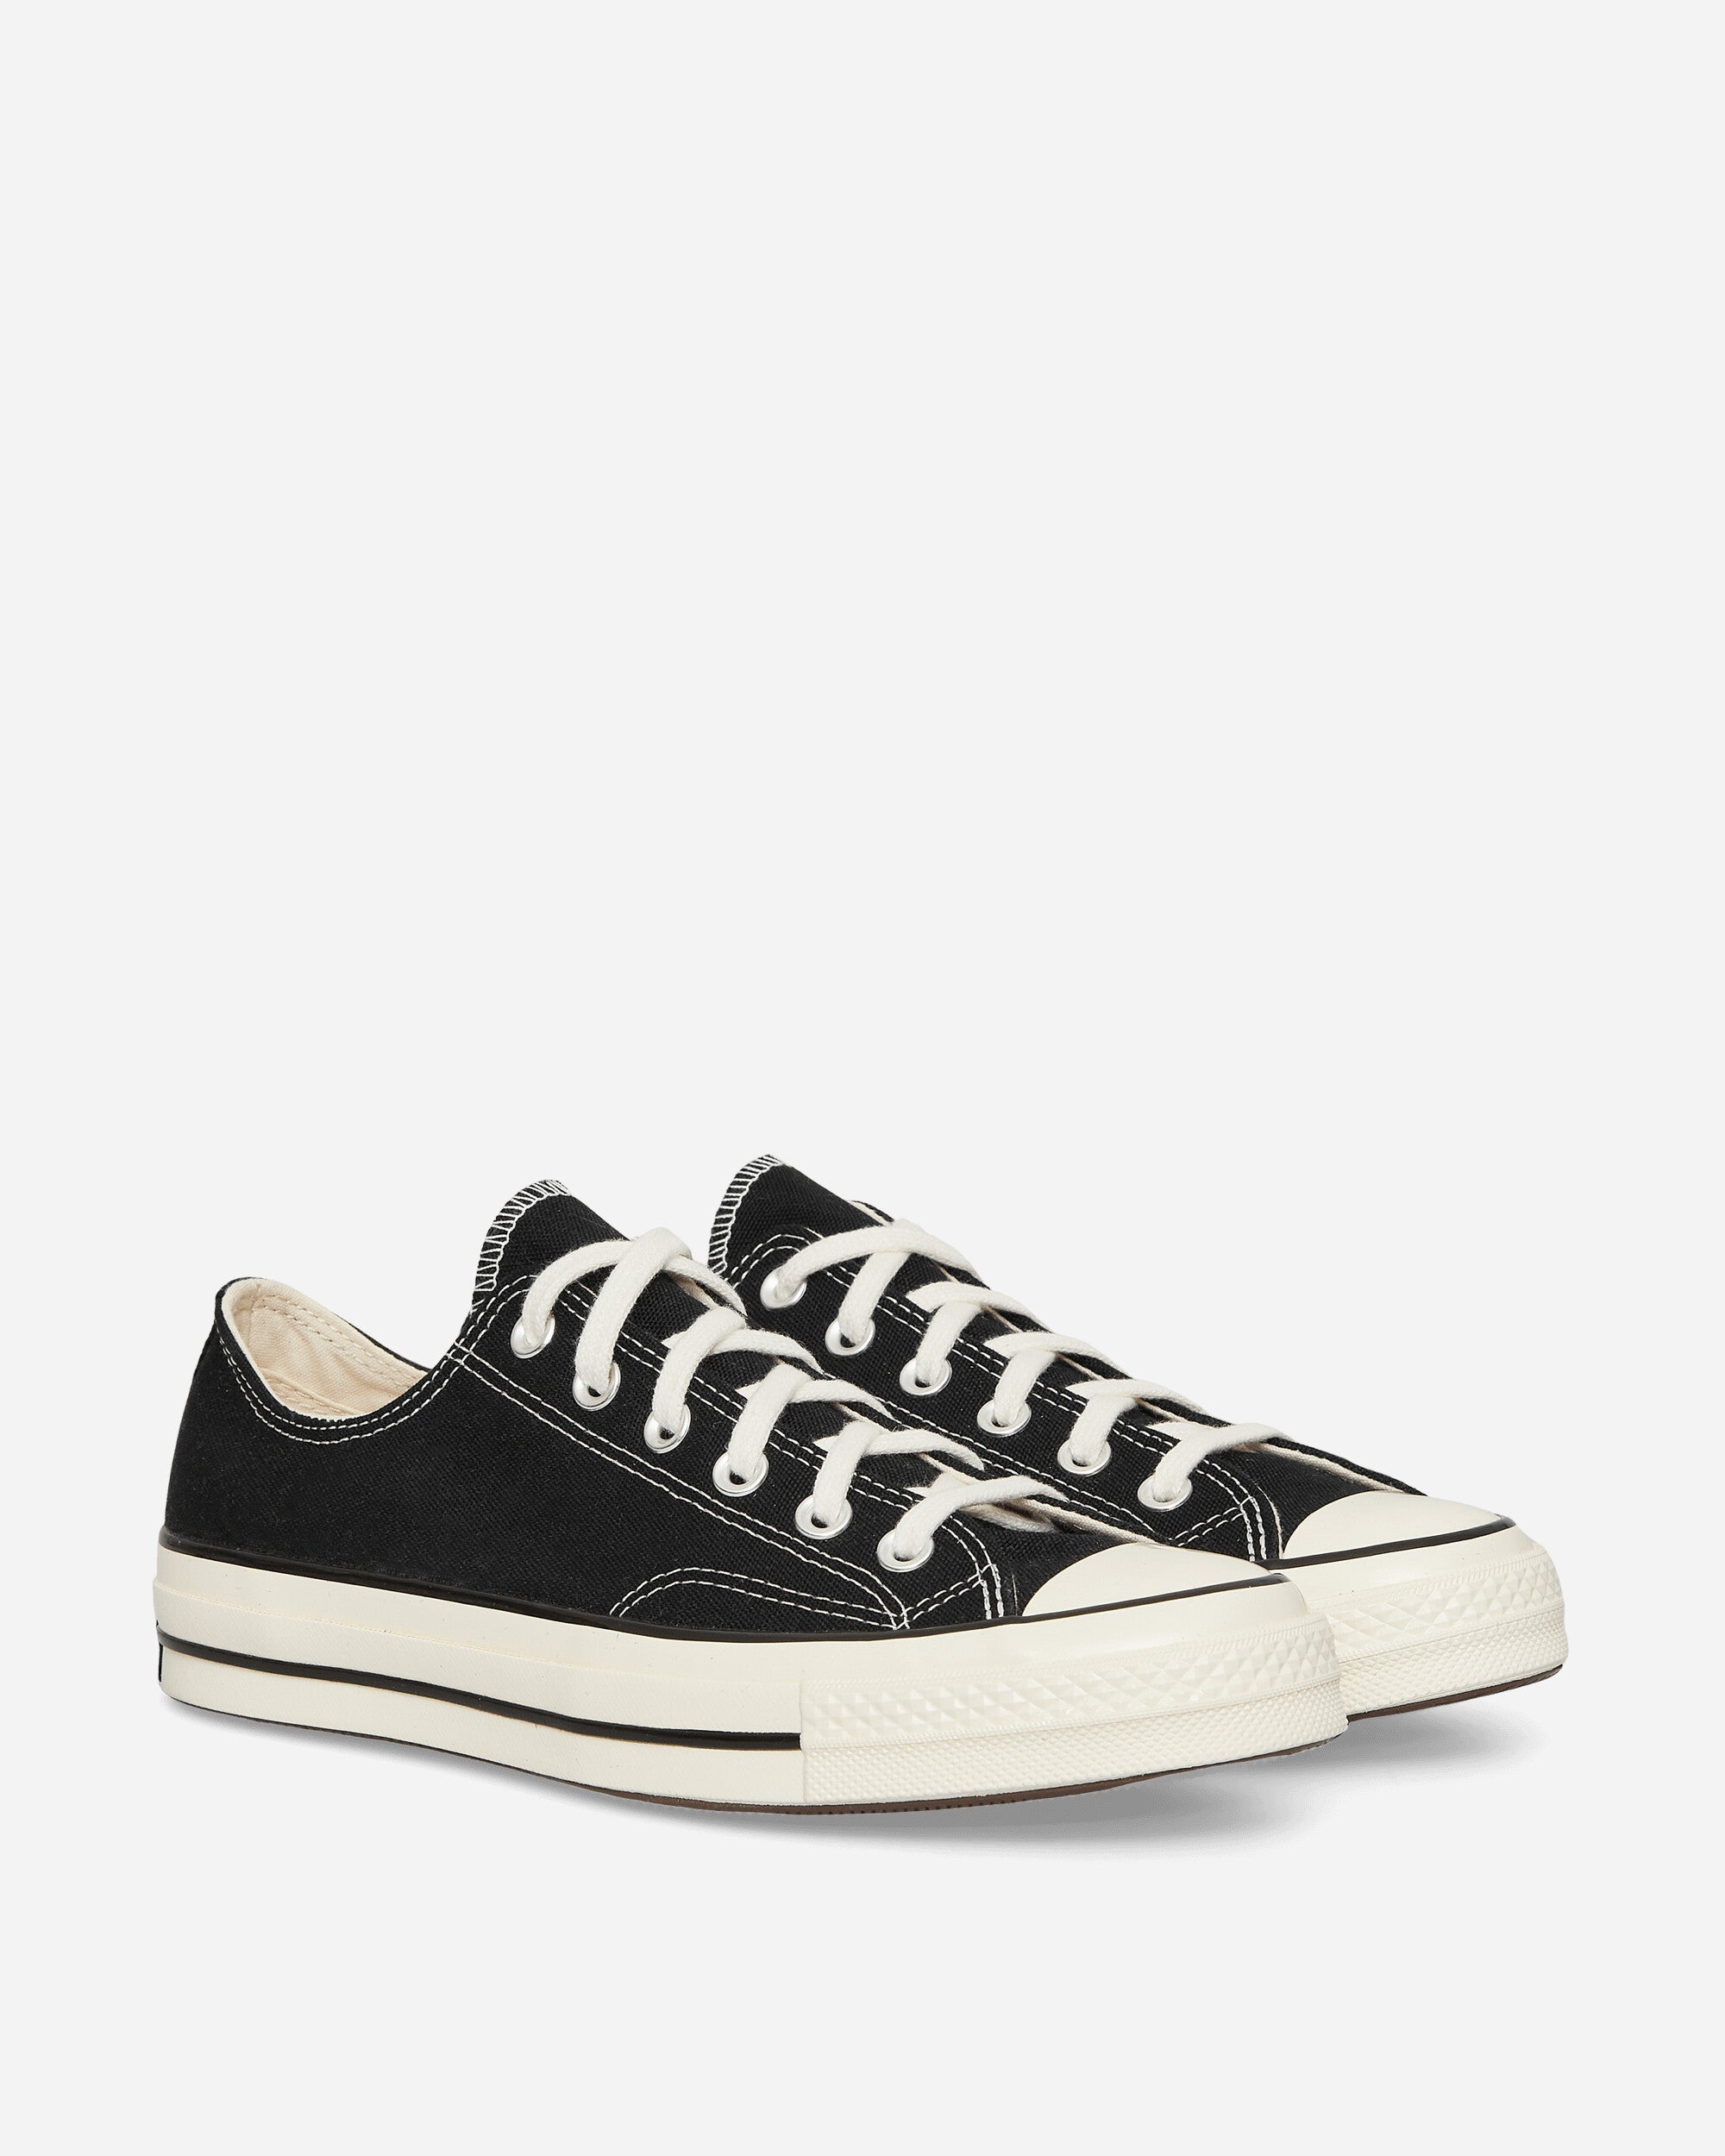 Converse Chuck 70 Black/Black/Egret Sneakers Low 162058C